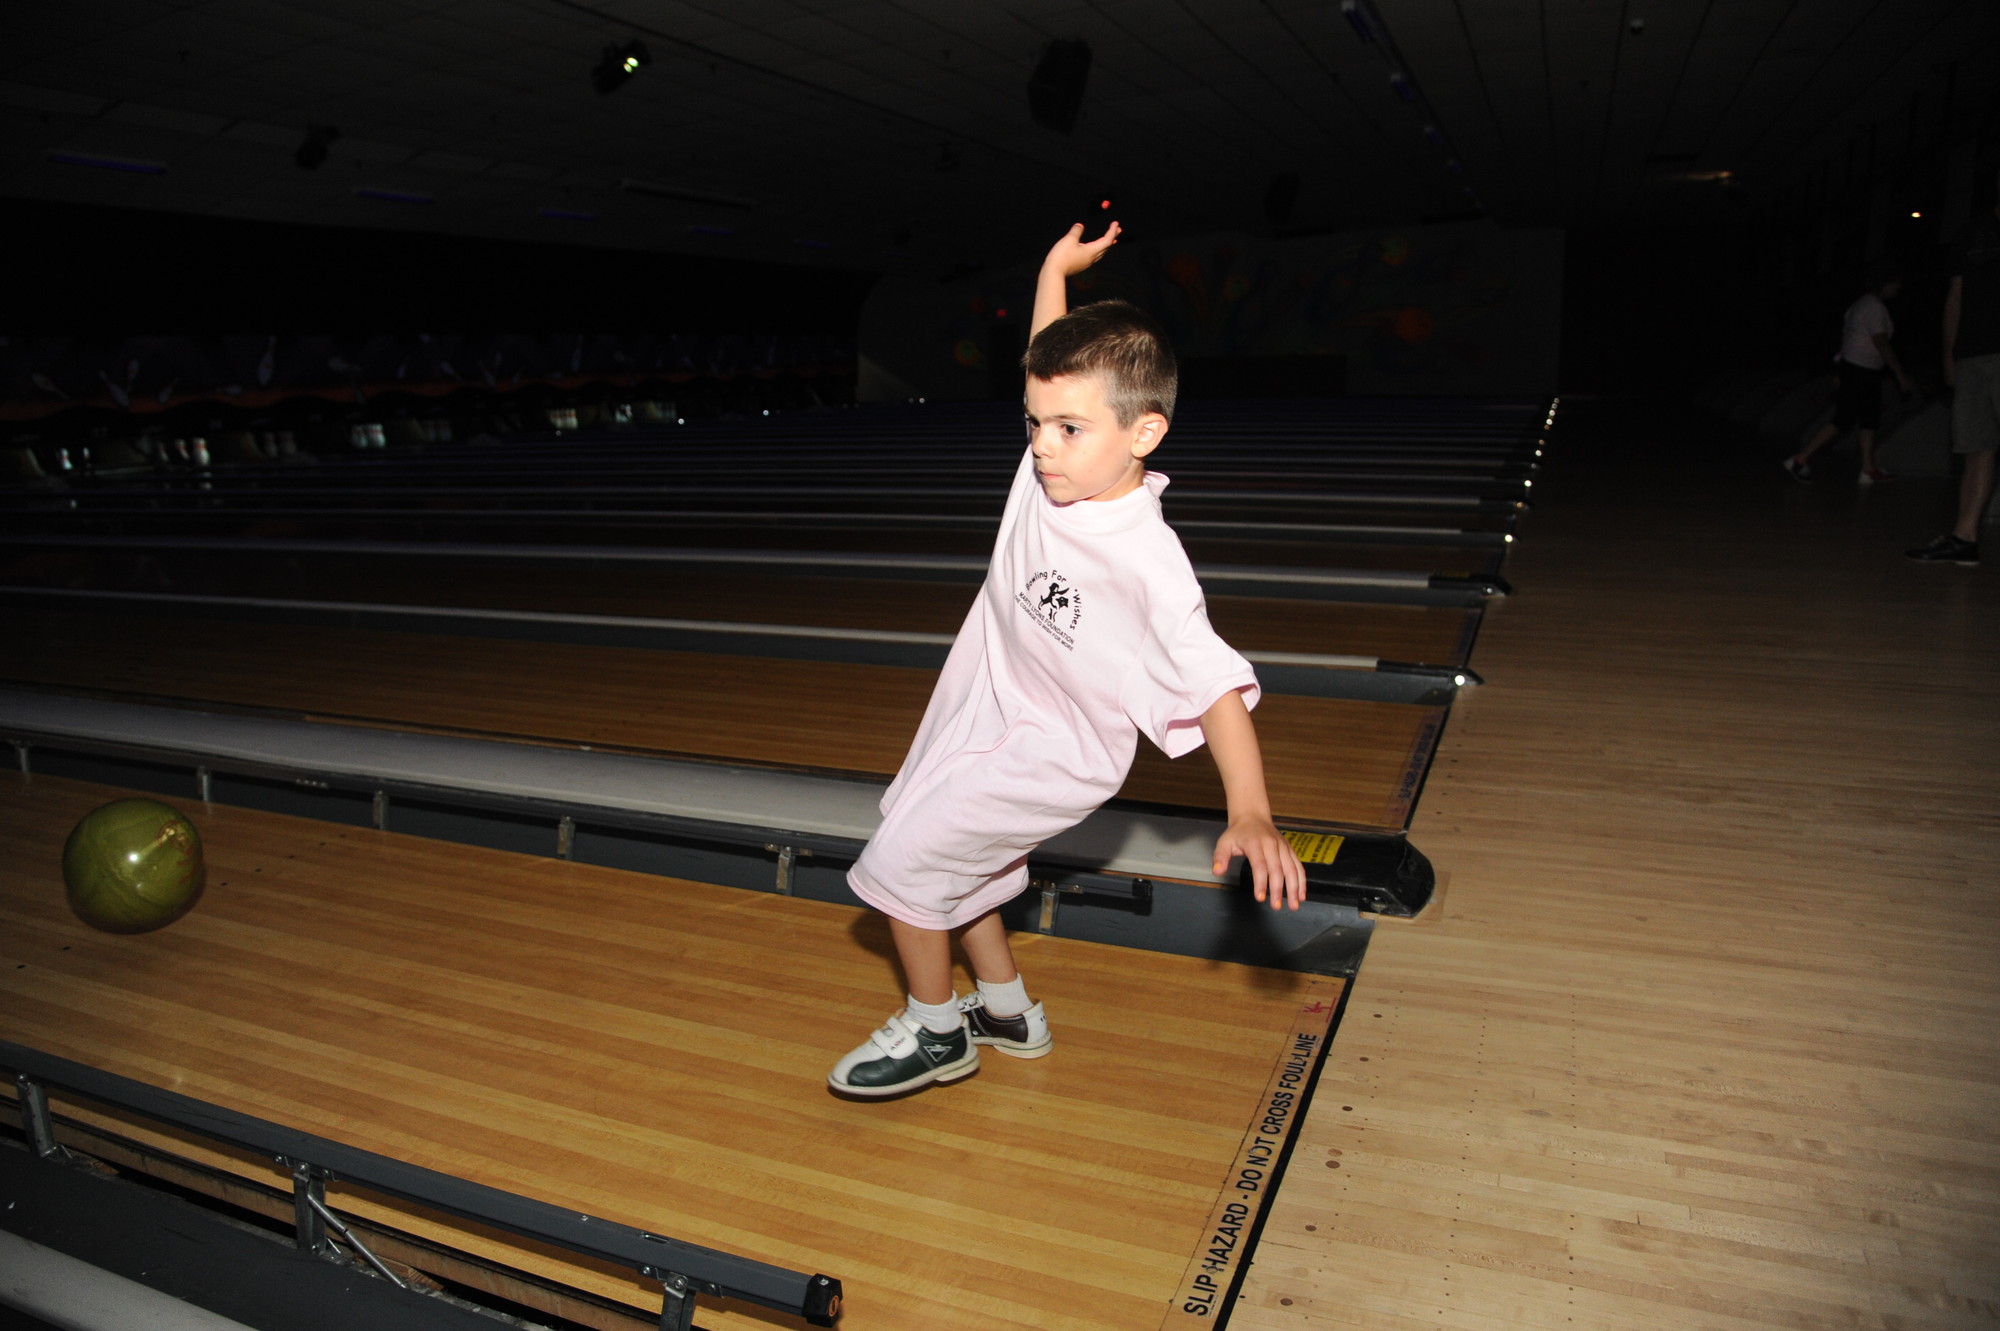 Paul Montuori, 4, showcased a unique bowling style.